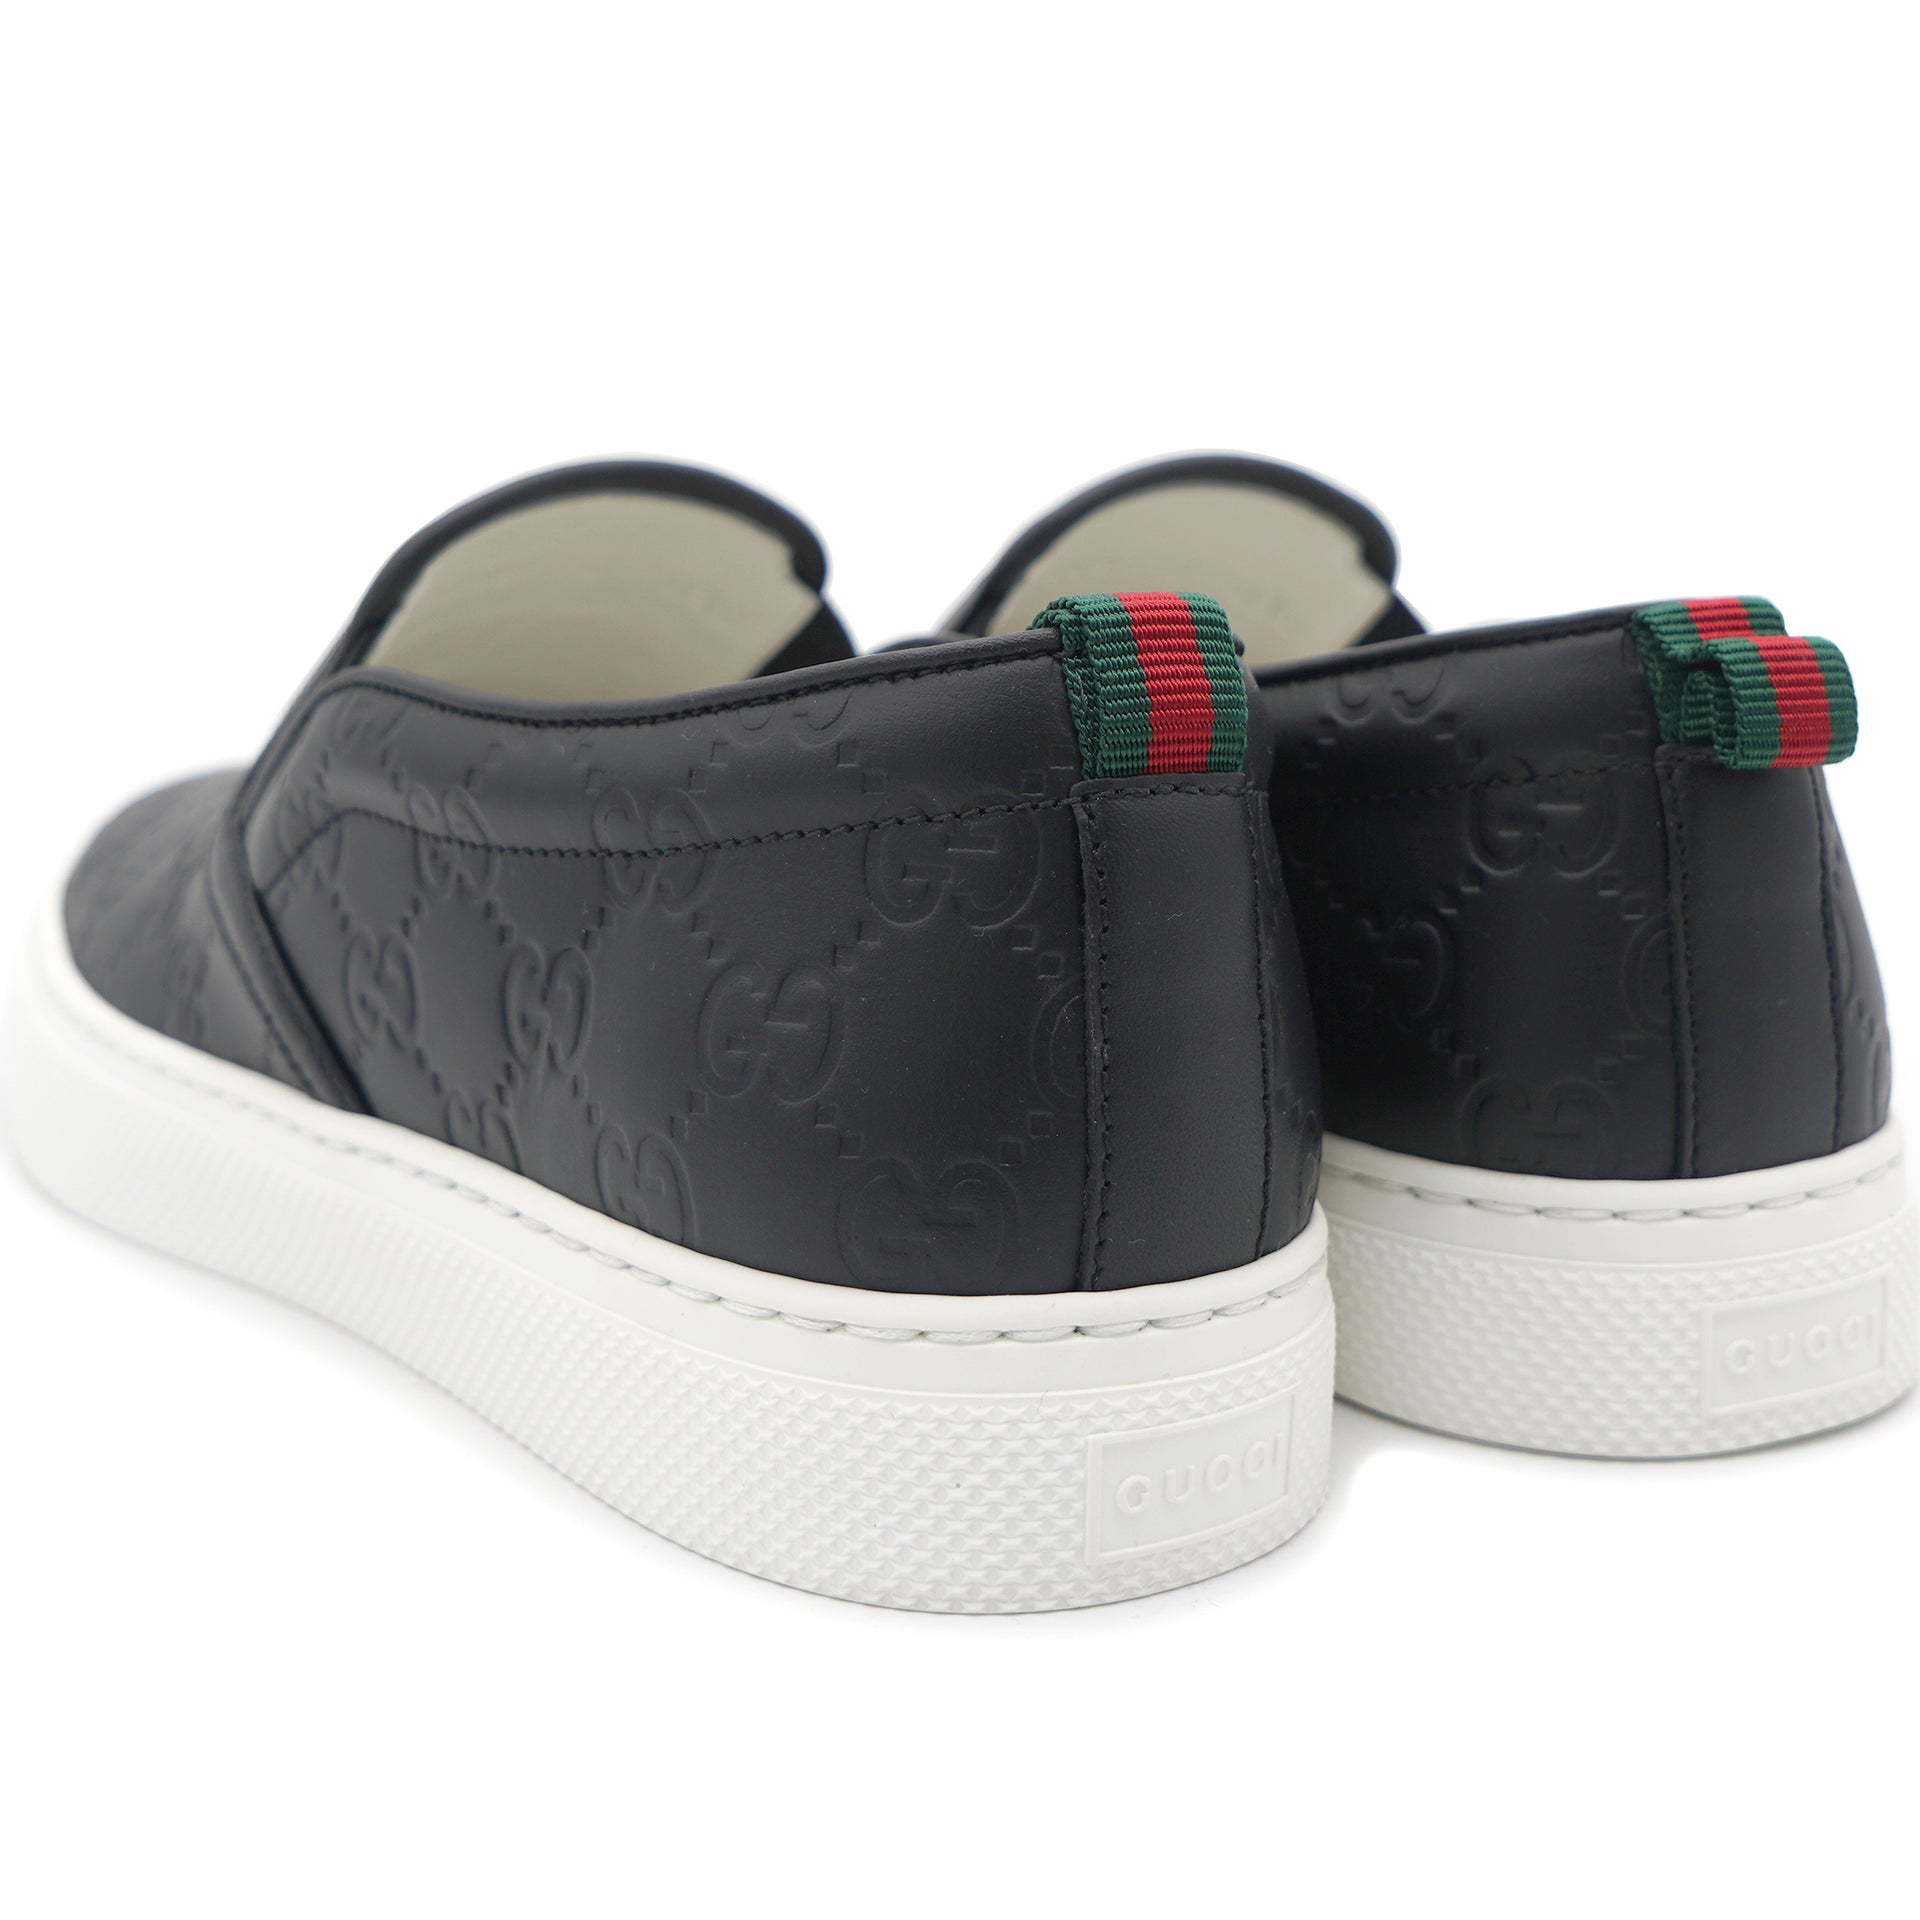 Gucci Guccissima Leather Slip on Sneakers